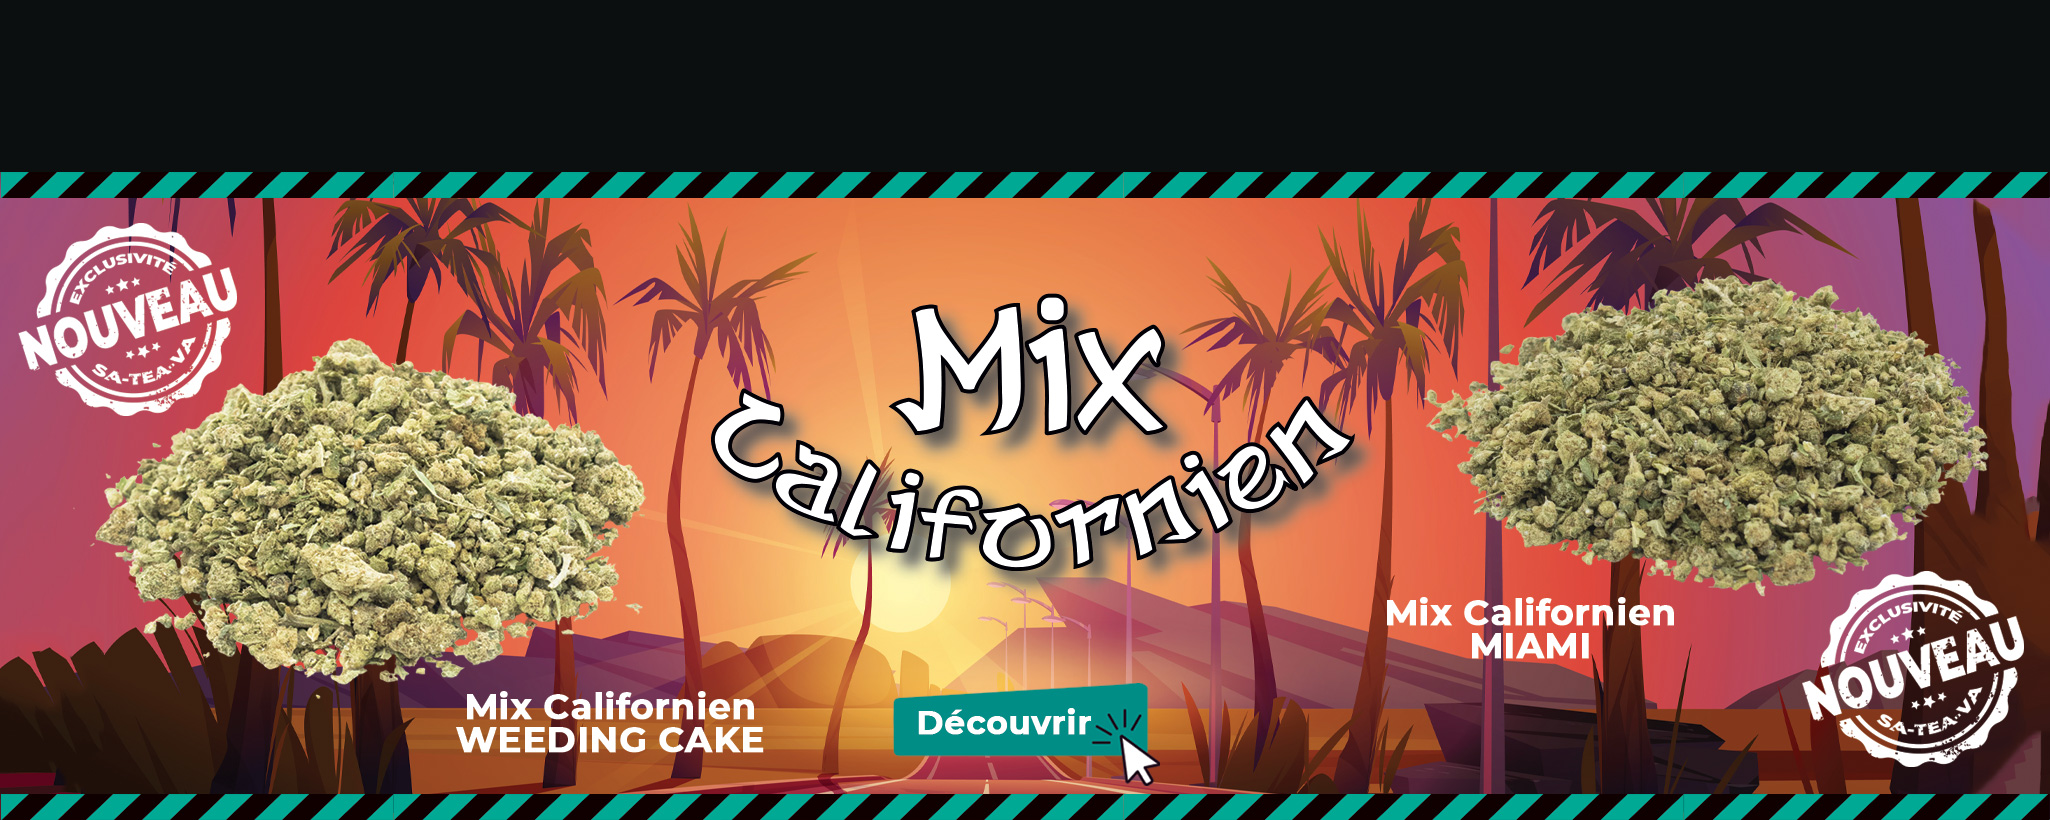 Mix Californien